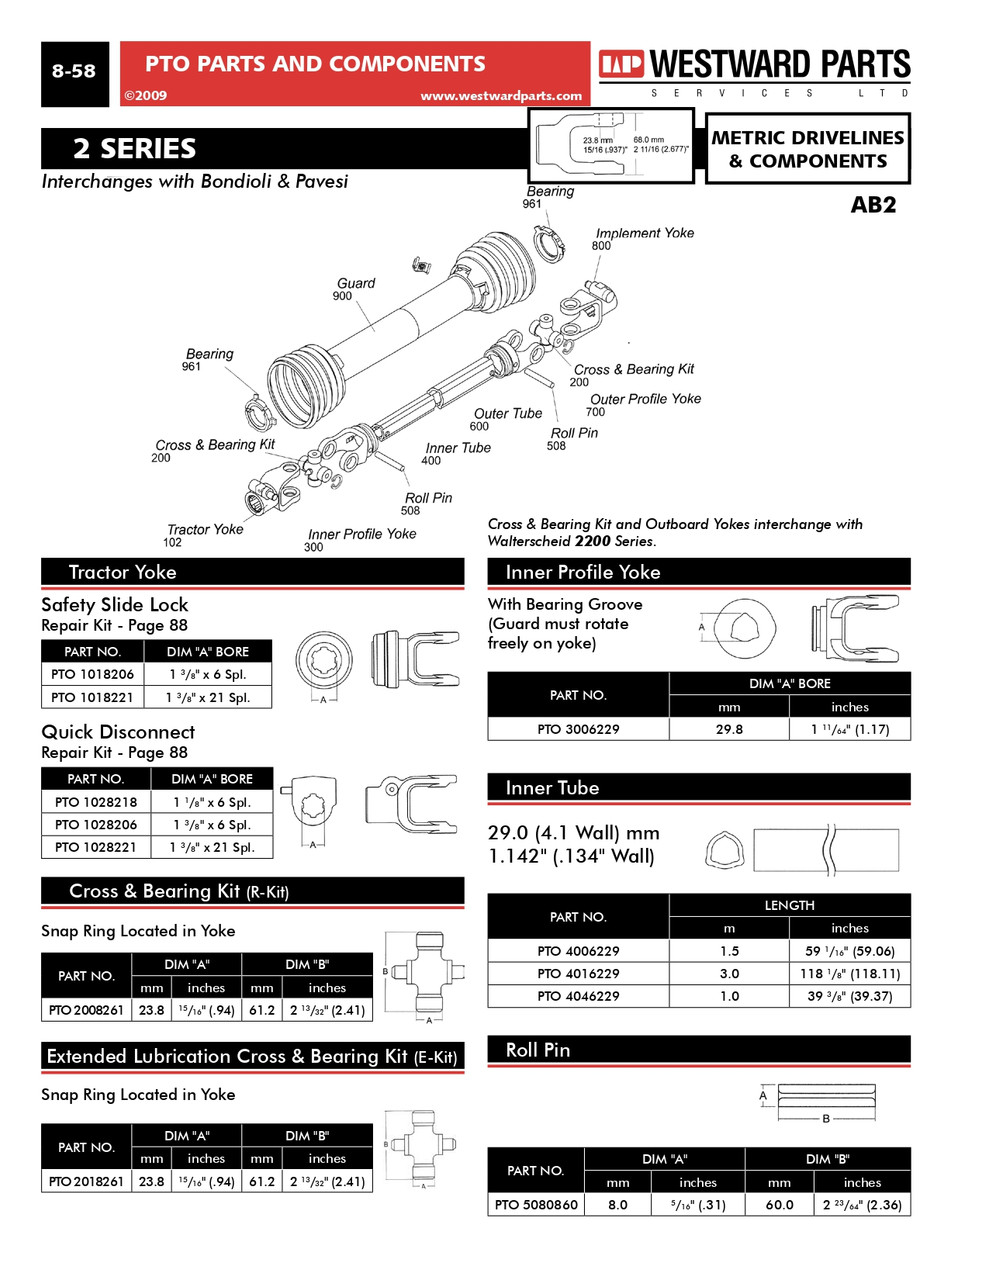 1-3/8"-6 Spline - Push Pin QD Yoke - Bondioli® 2 / Walterscheid® AW20 Series  PTO102-8206